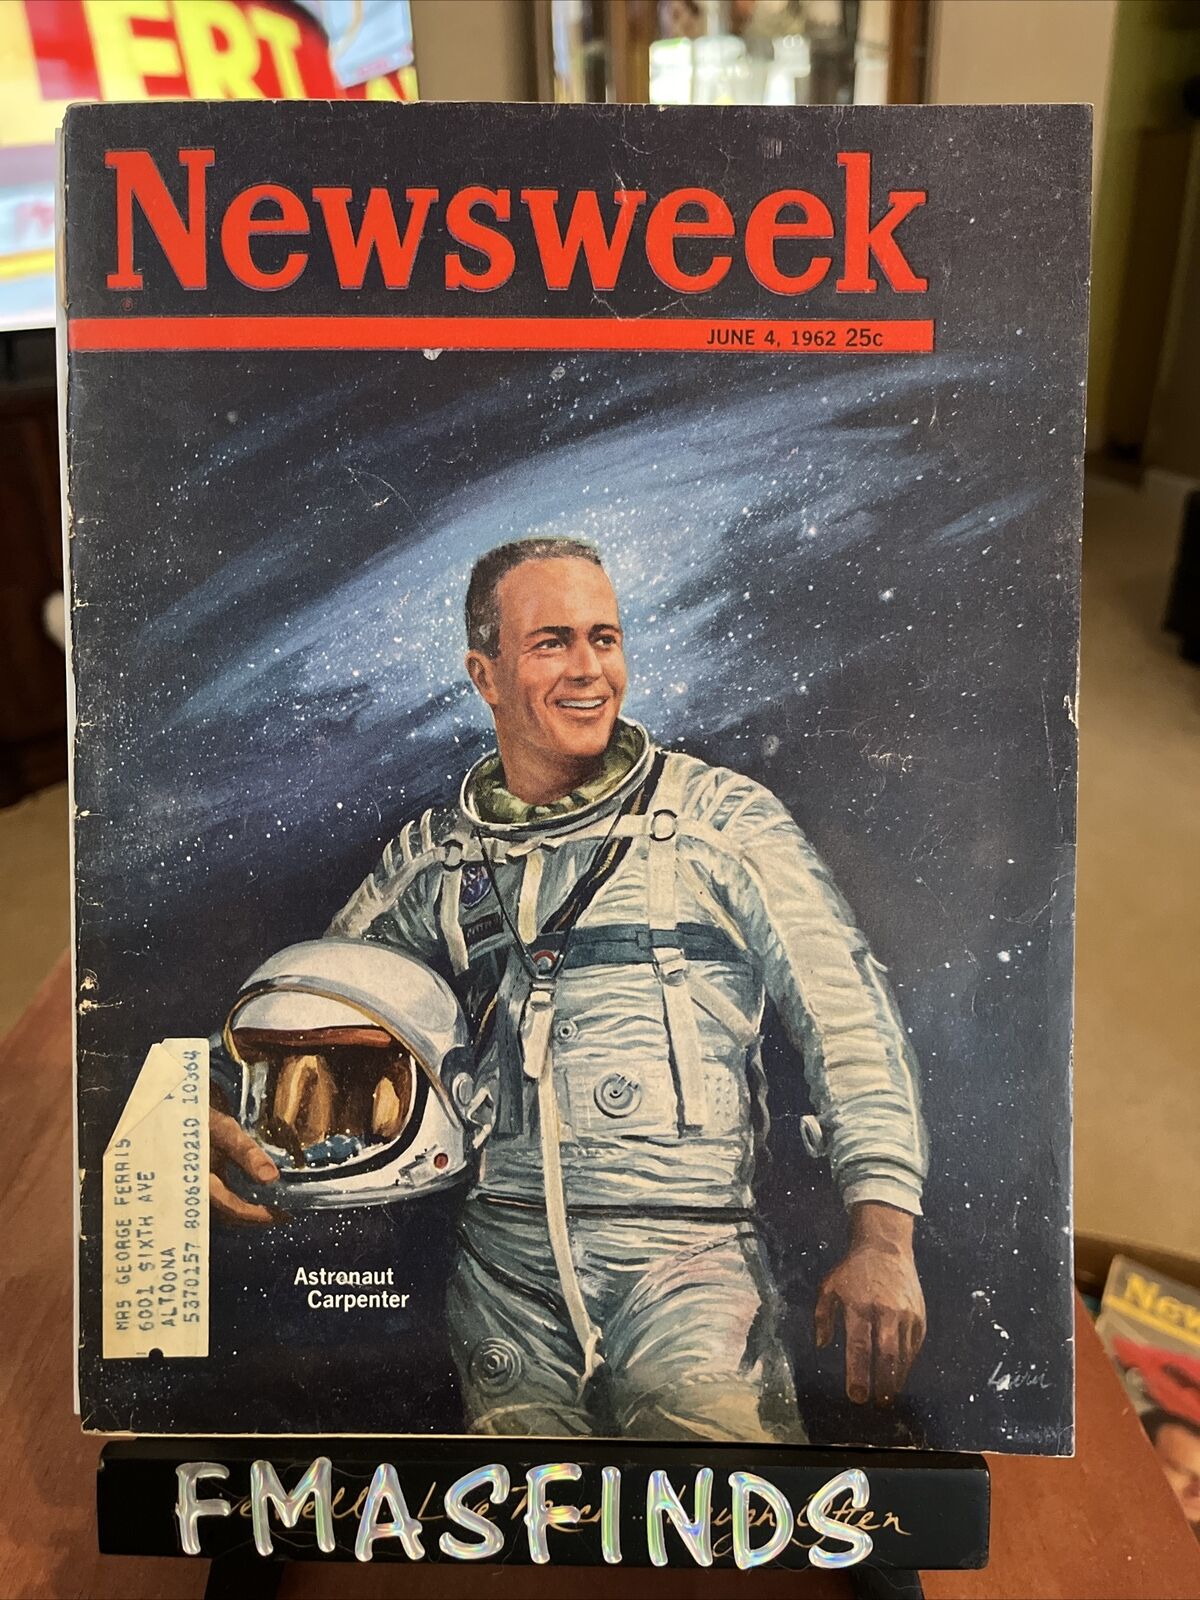 J2 1962 SCOTT CARPENTER NASA ASTRONAUT June 4 NEWSWEEK Magazine 